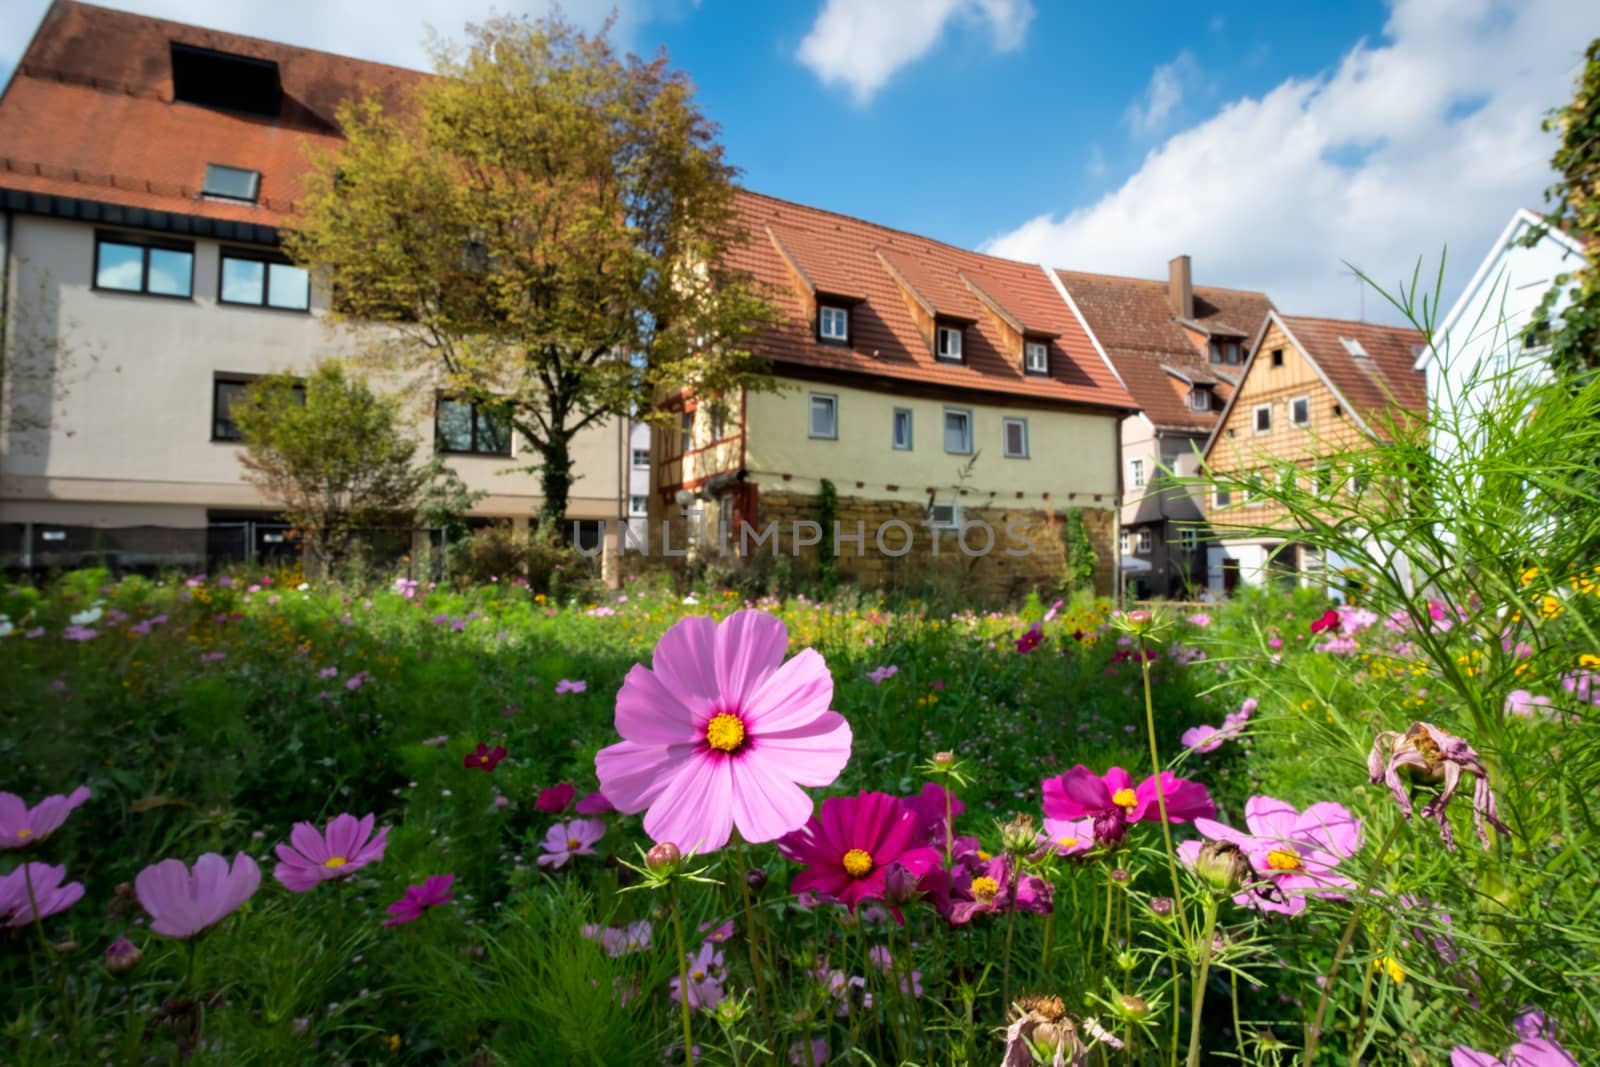 Flowers on a meadow in the German town Aalen in summer